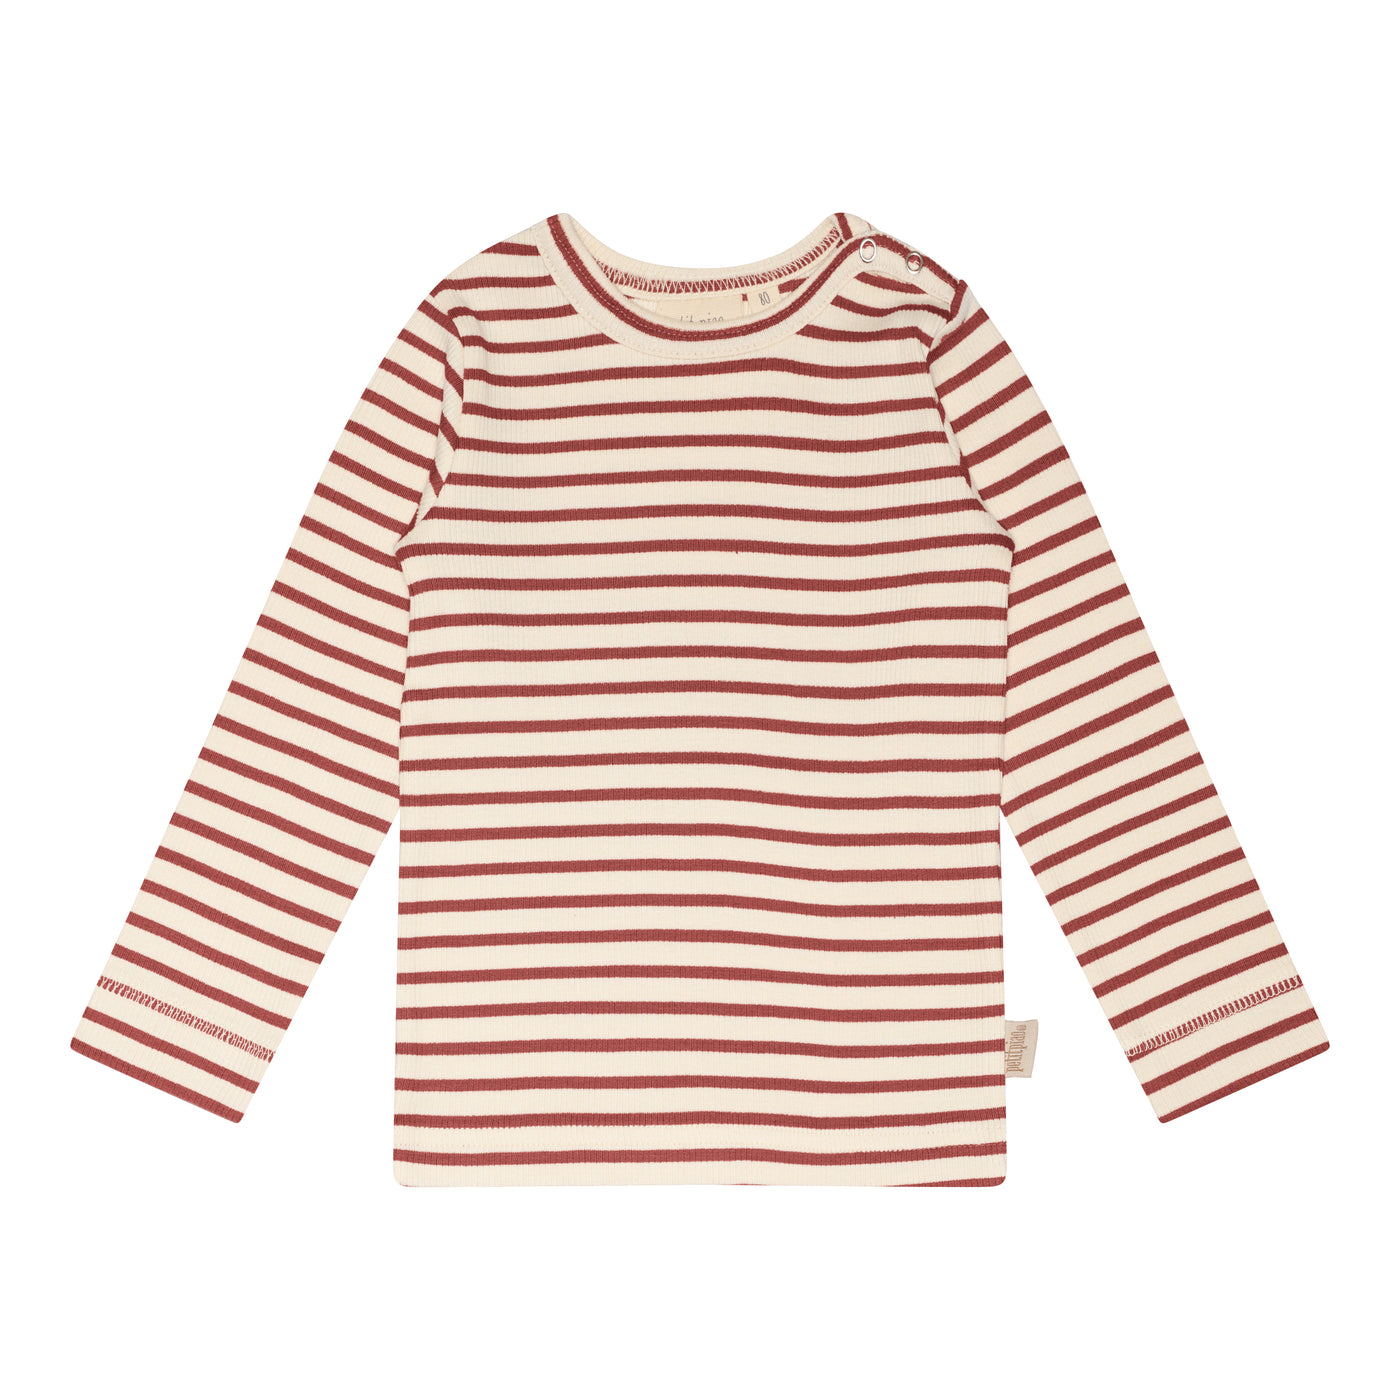 T-shirt L/S Modal Striped Berry Dust.